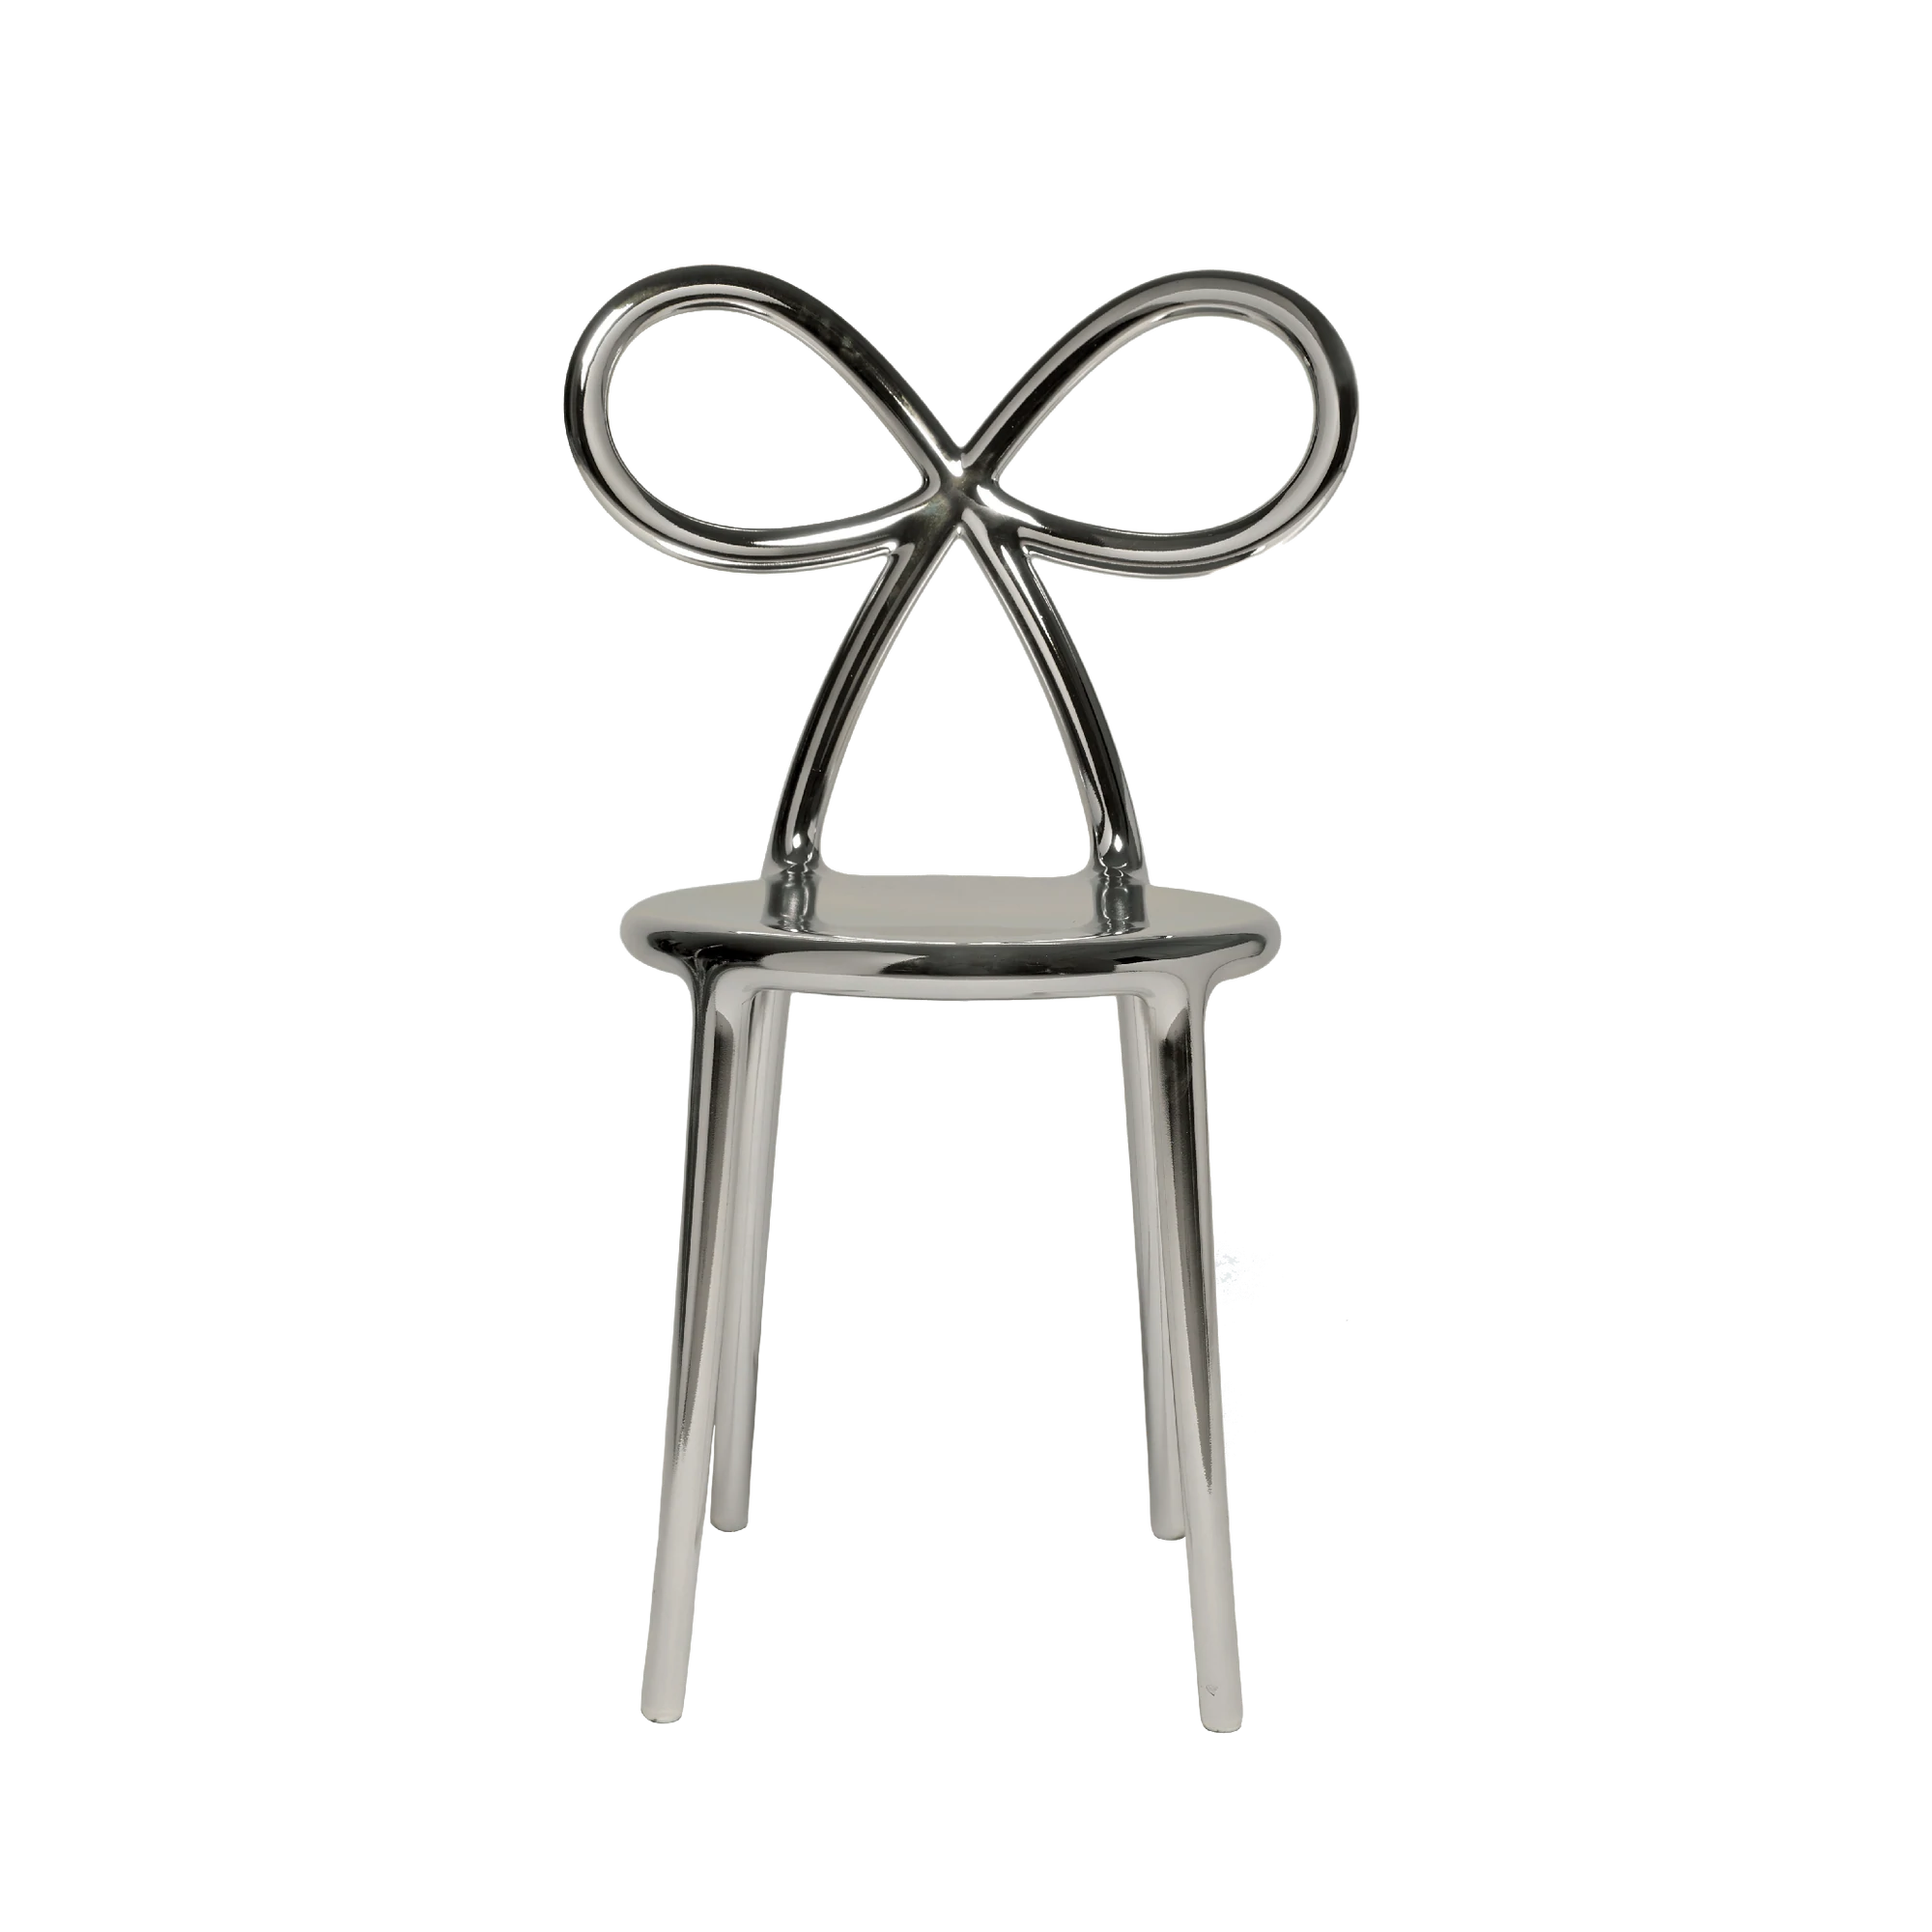 Qeeboo Ribbon chair metal finish, silver